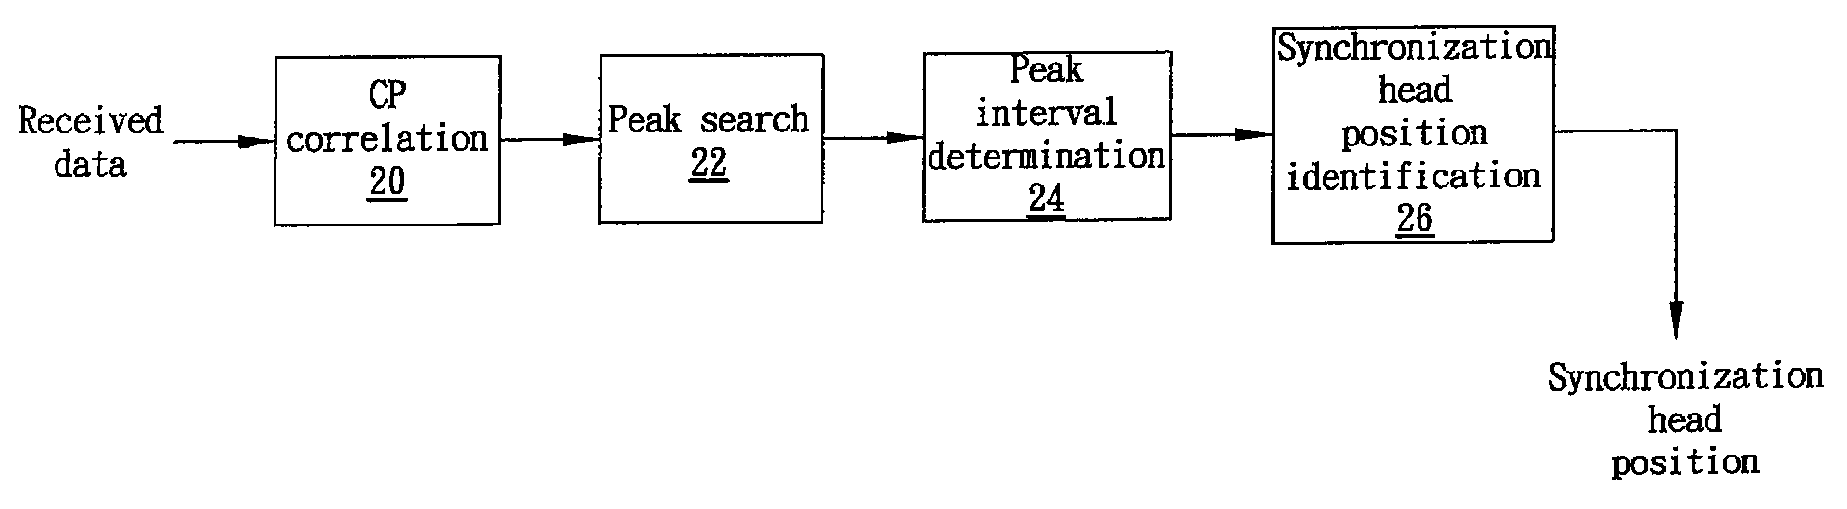 Correlation interval synchronization apparatus and method